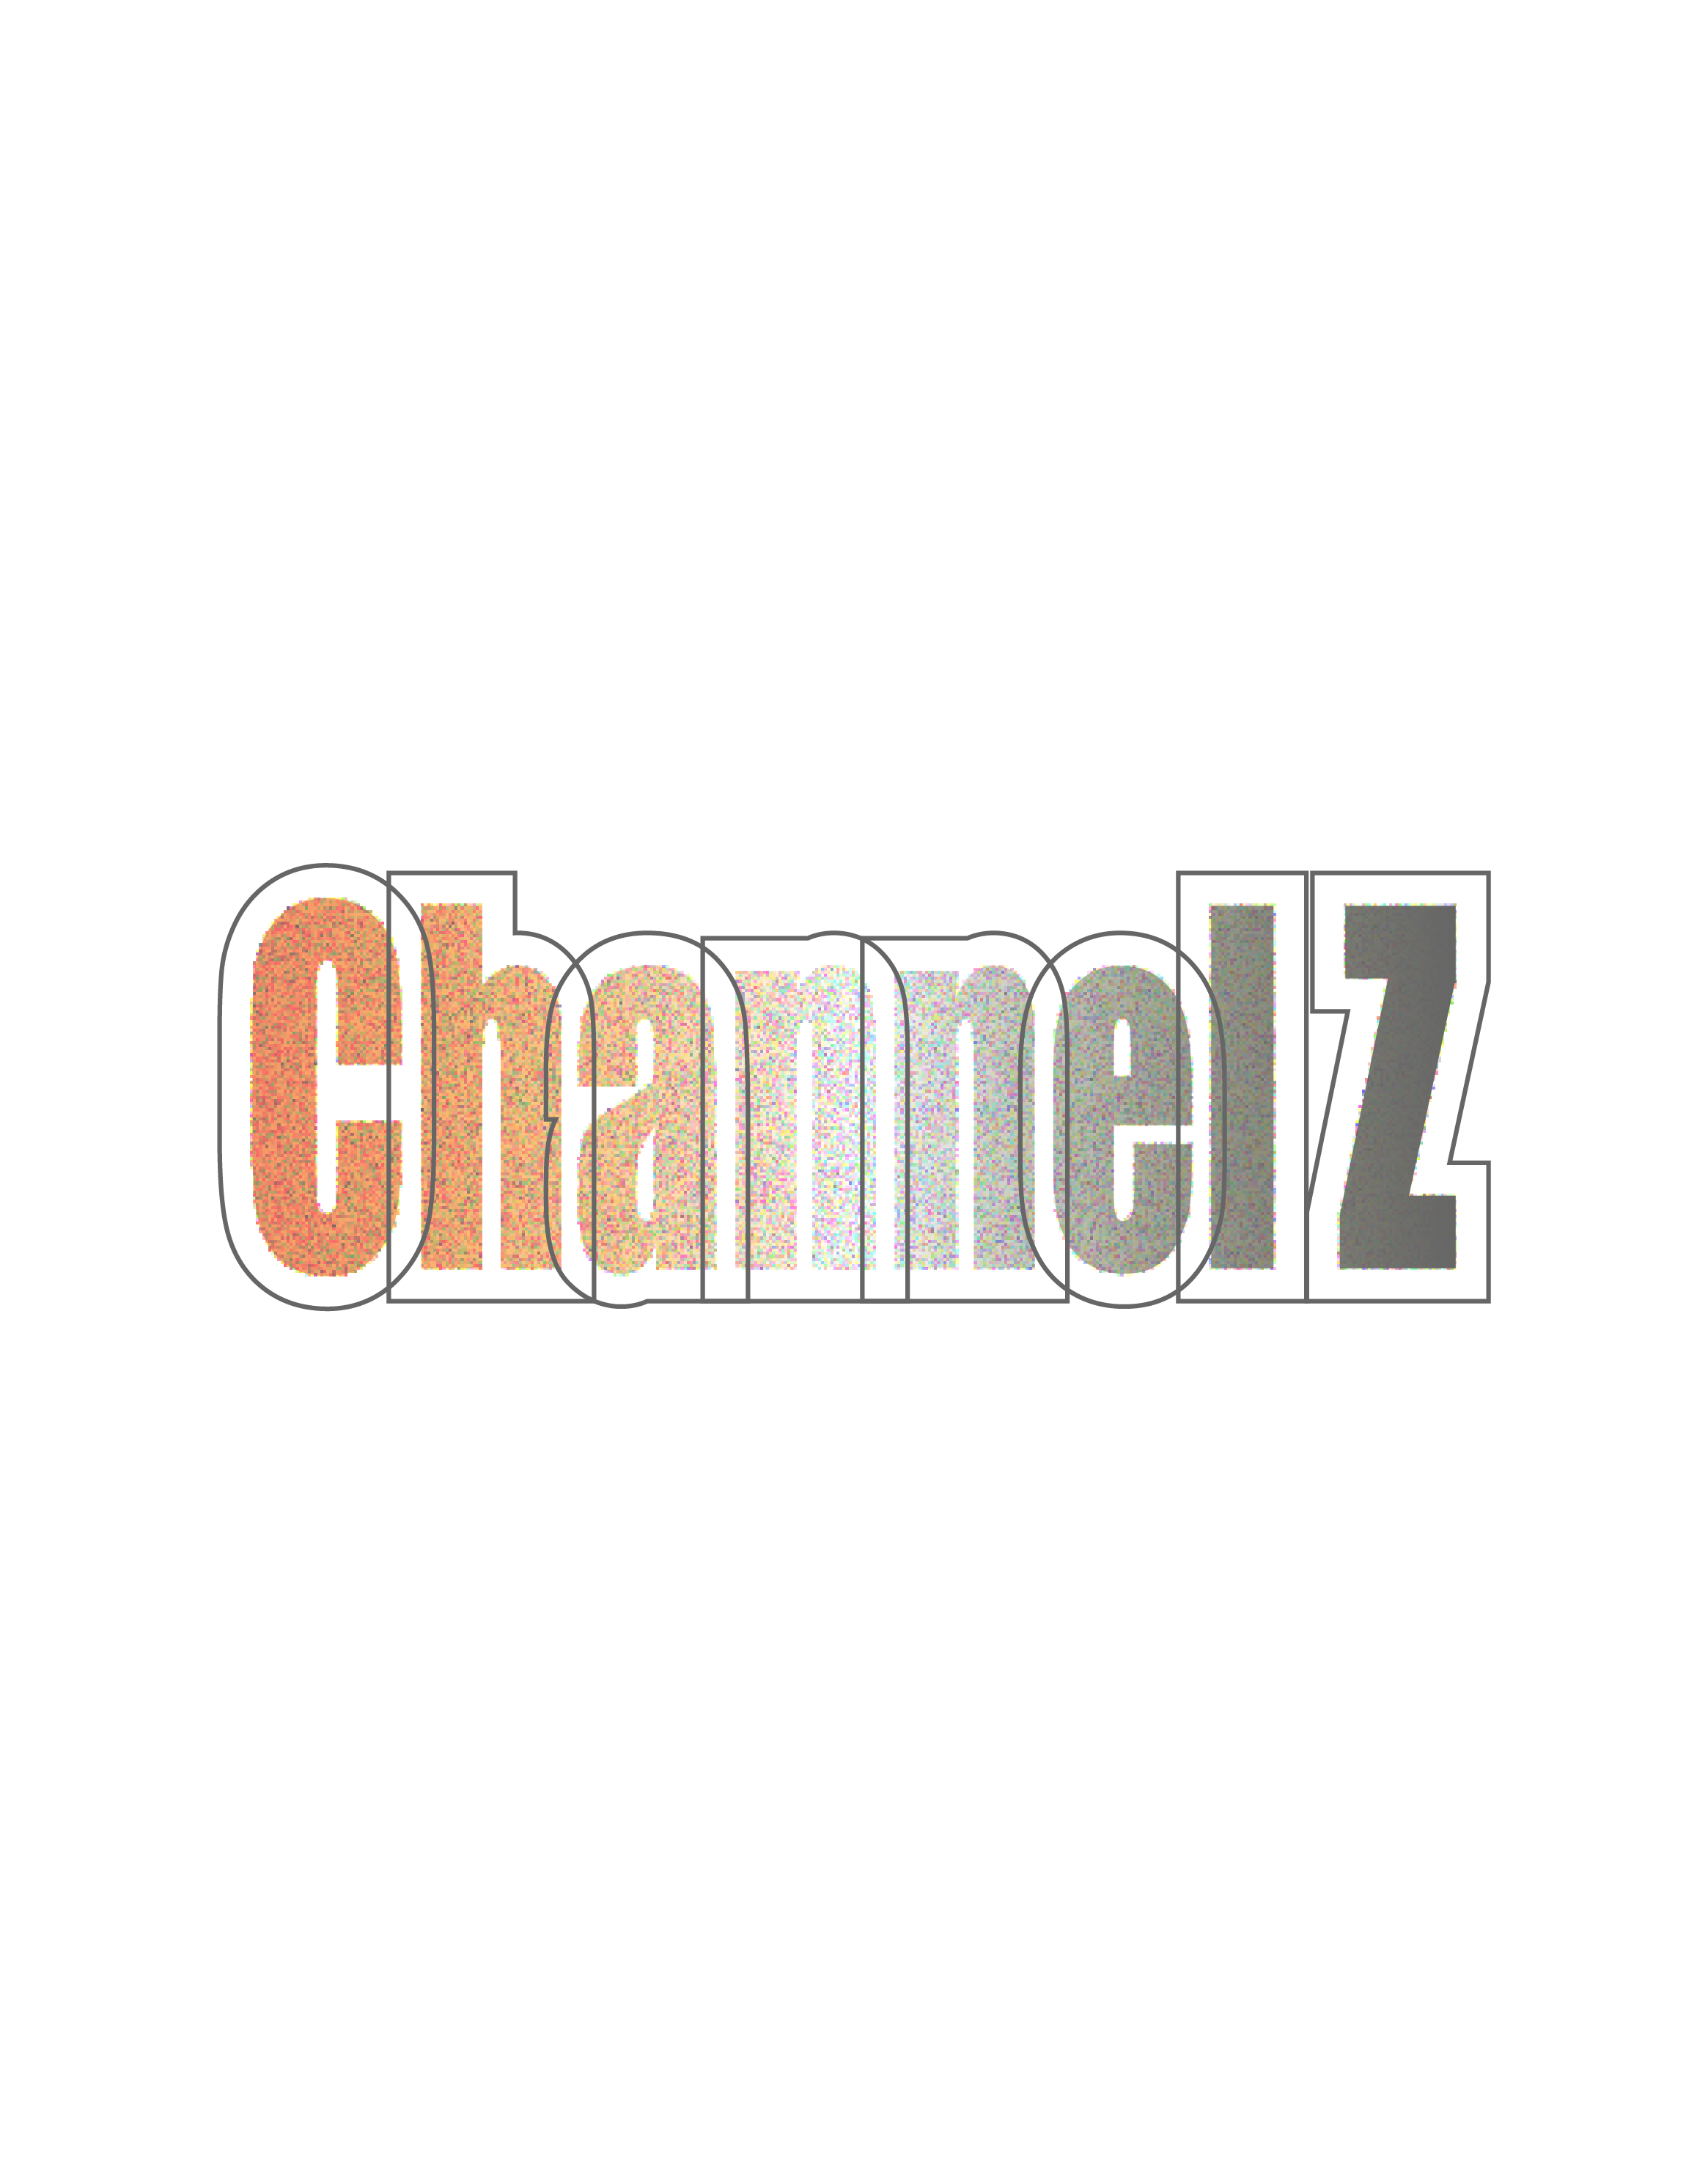 ChannelZ Graphic Art Logo Image